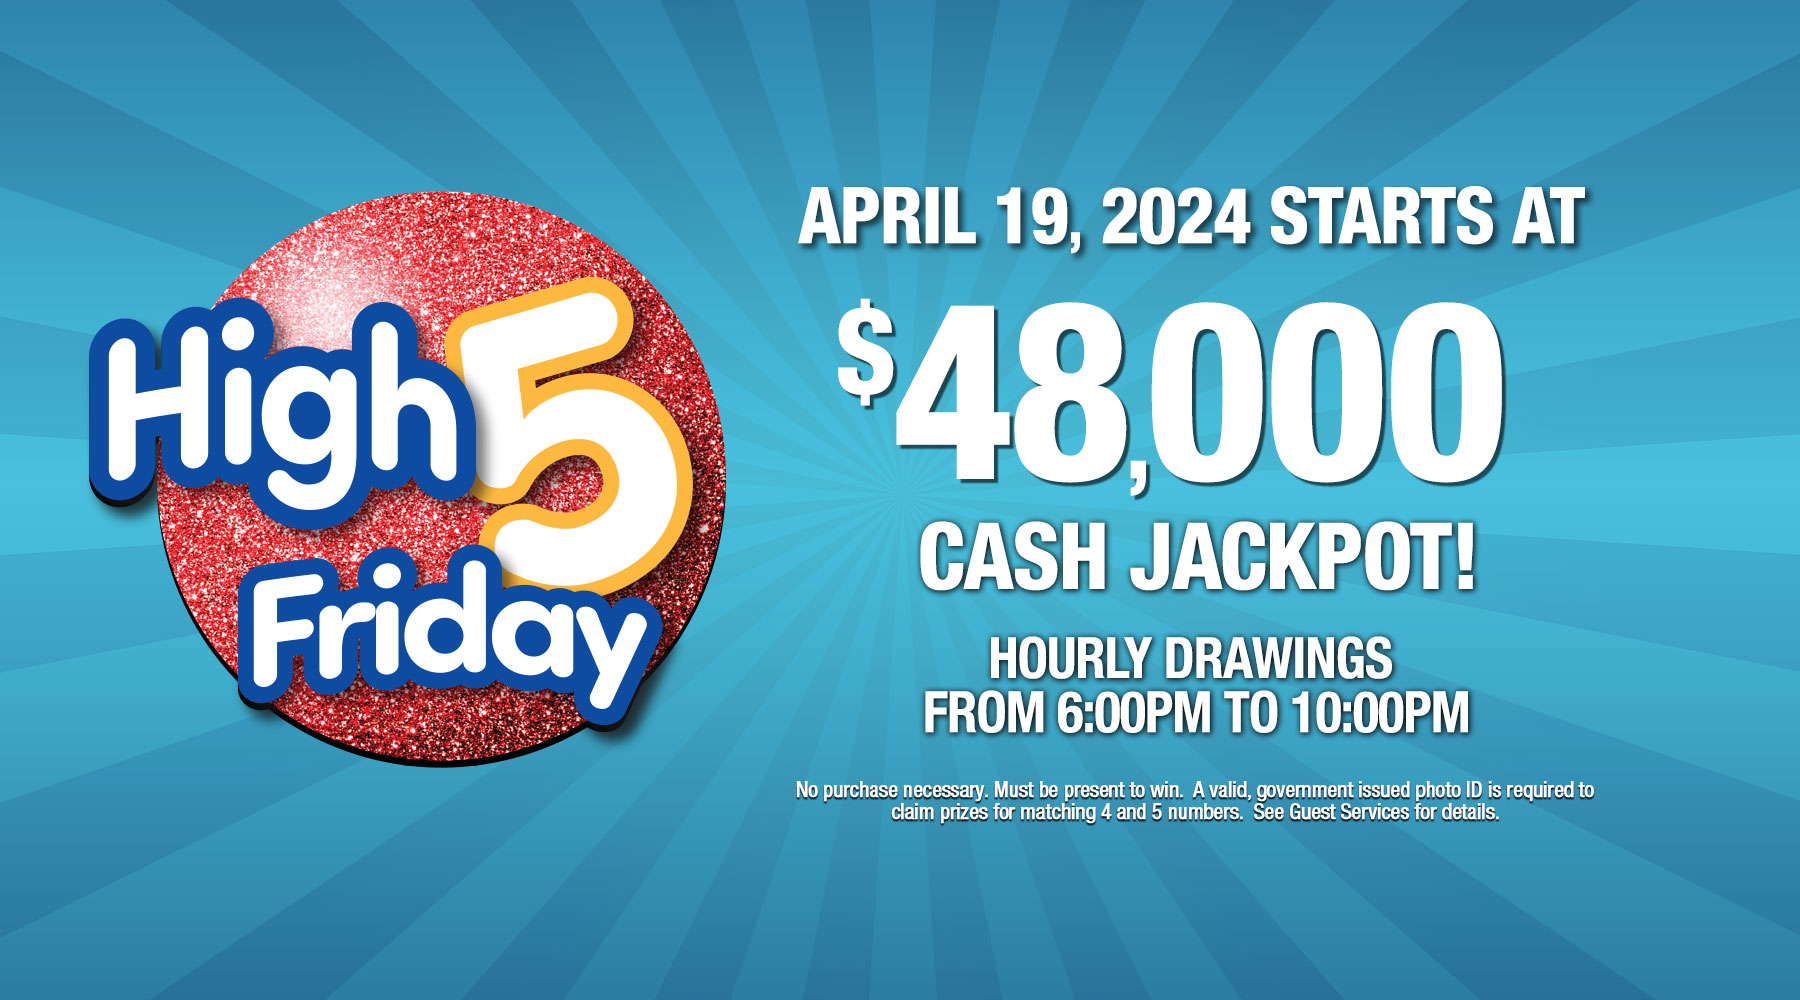 High 5 Friday CASH jackpot starts at $48,000 on Friday, April 19, 2024